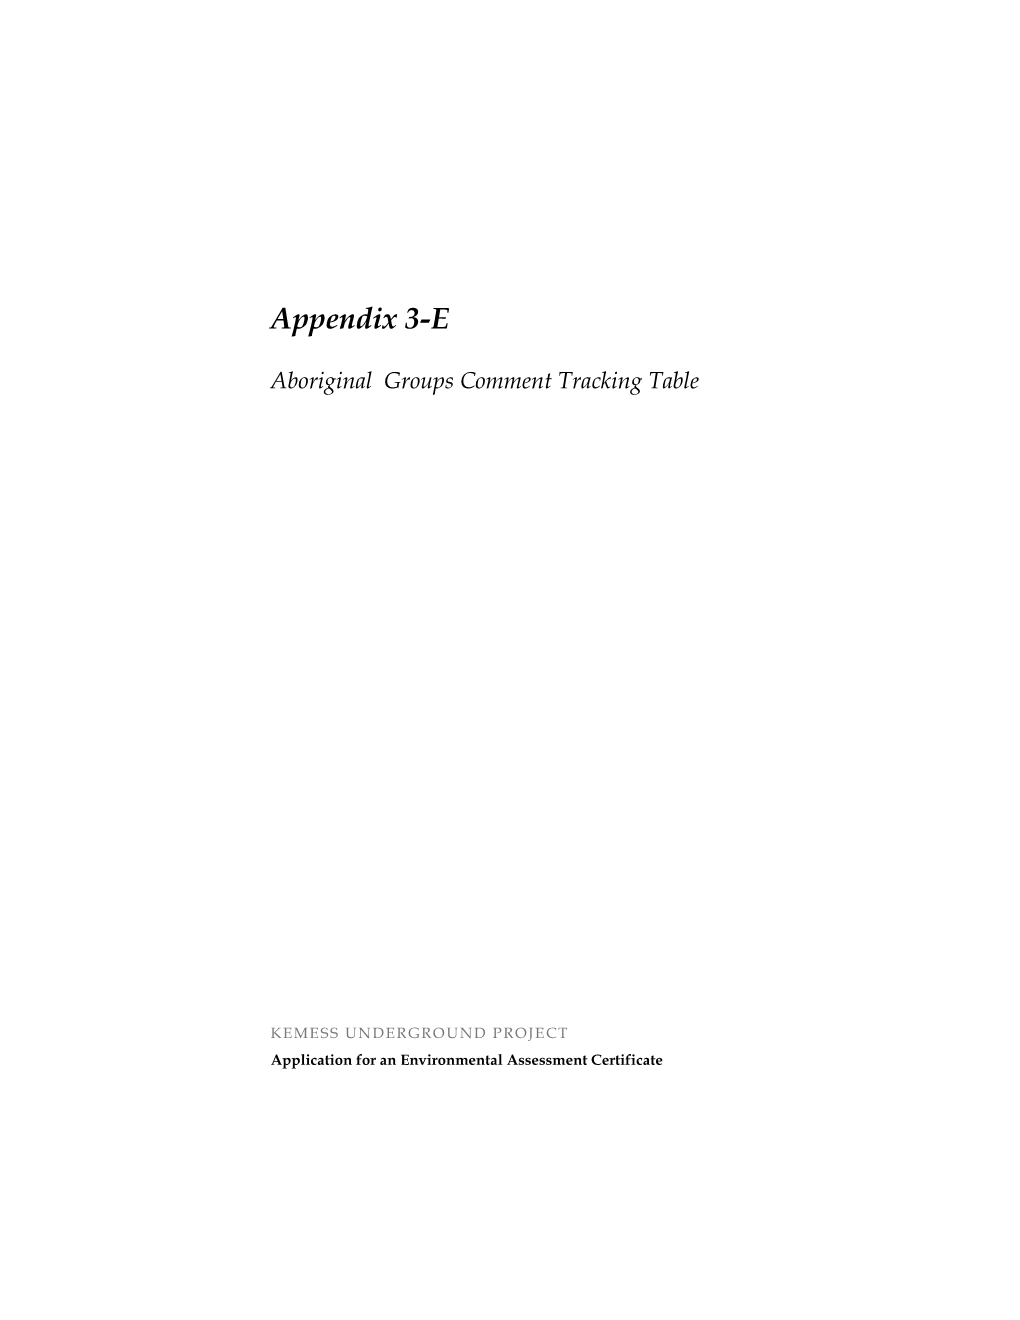 Appendix 3-E Aboriginal Comments Tracking Table